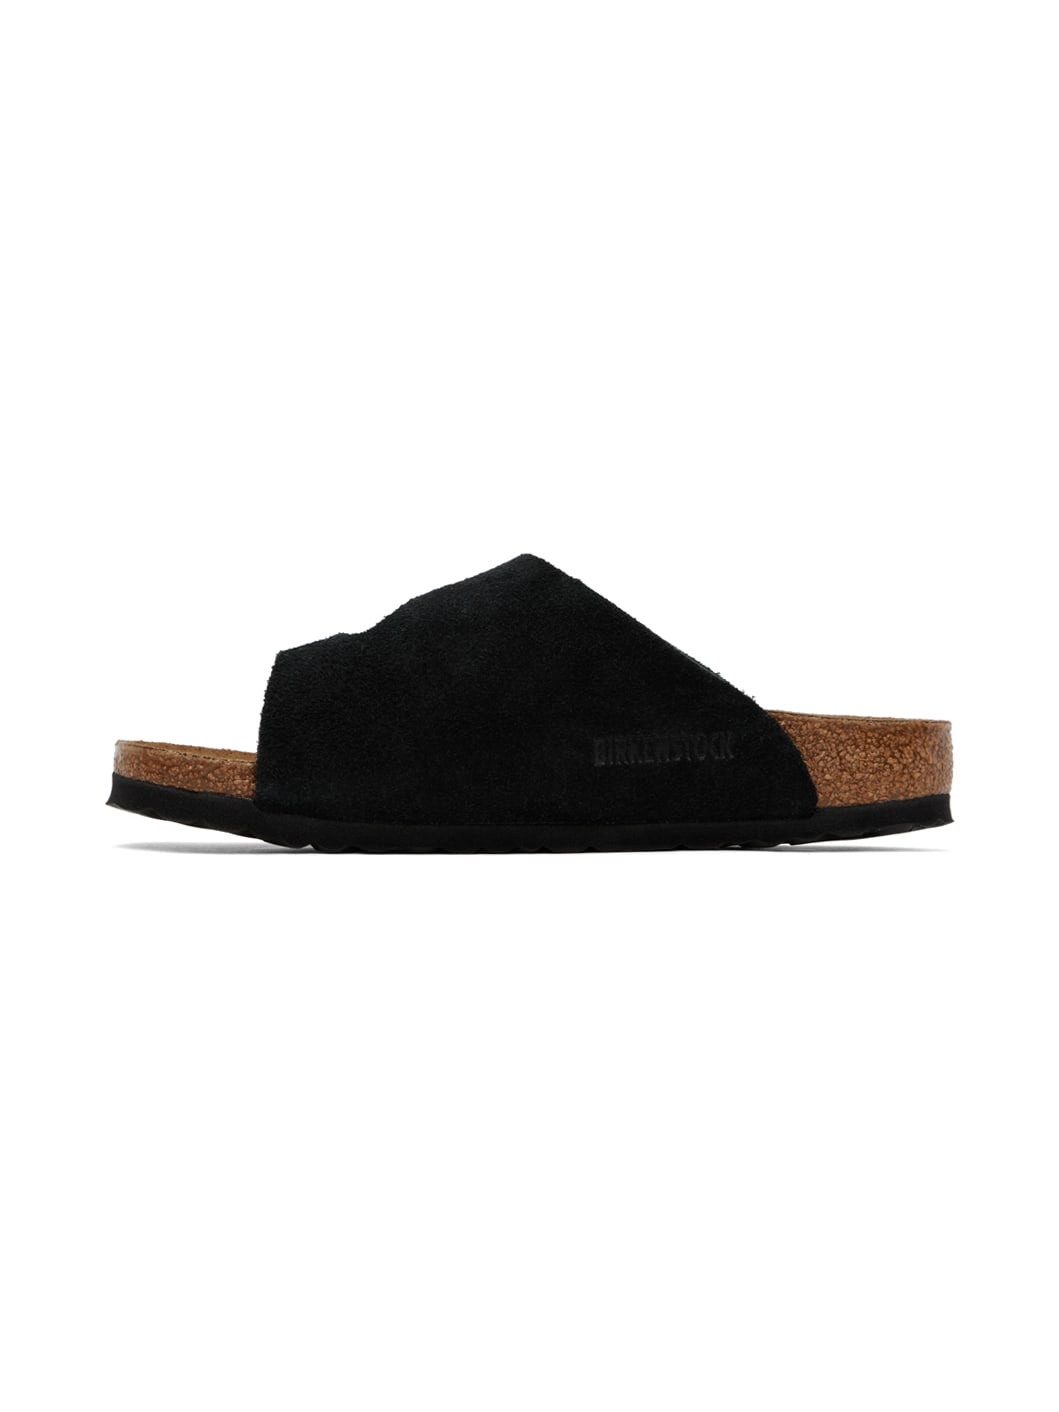 Black Narrow Zürich Sandals - 3